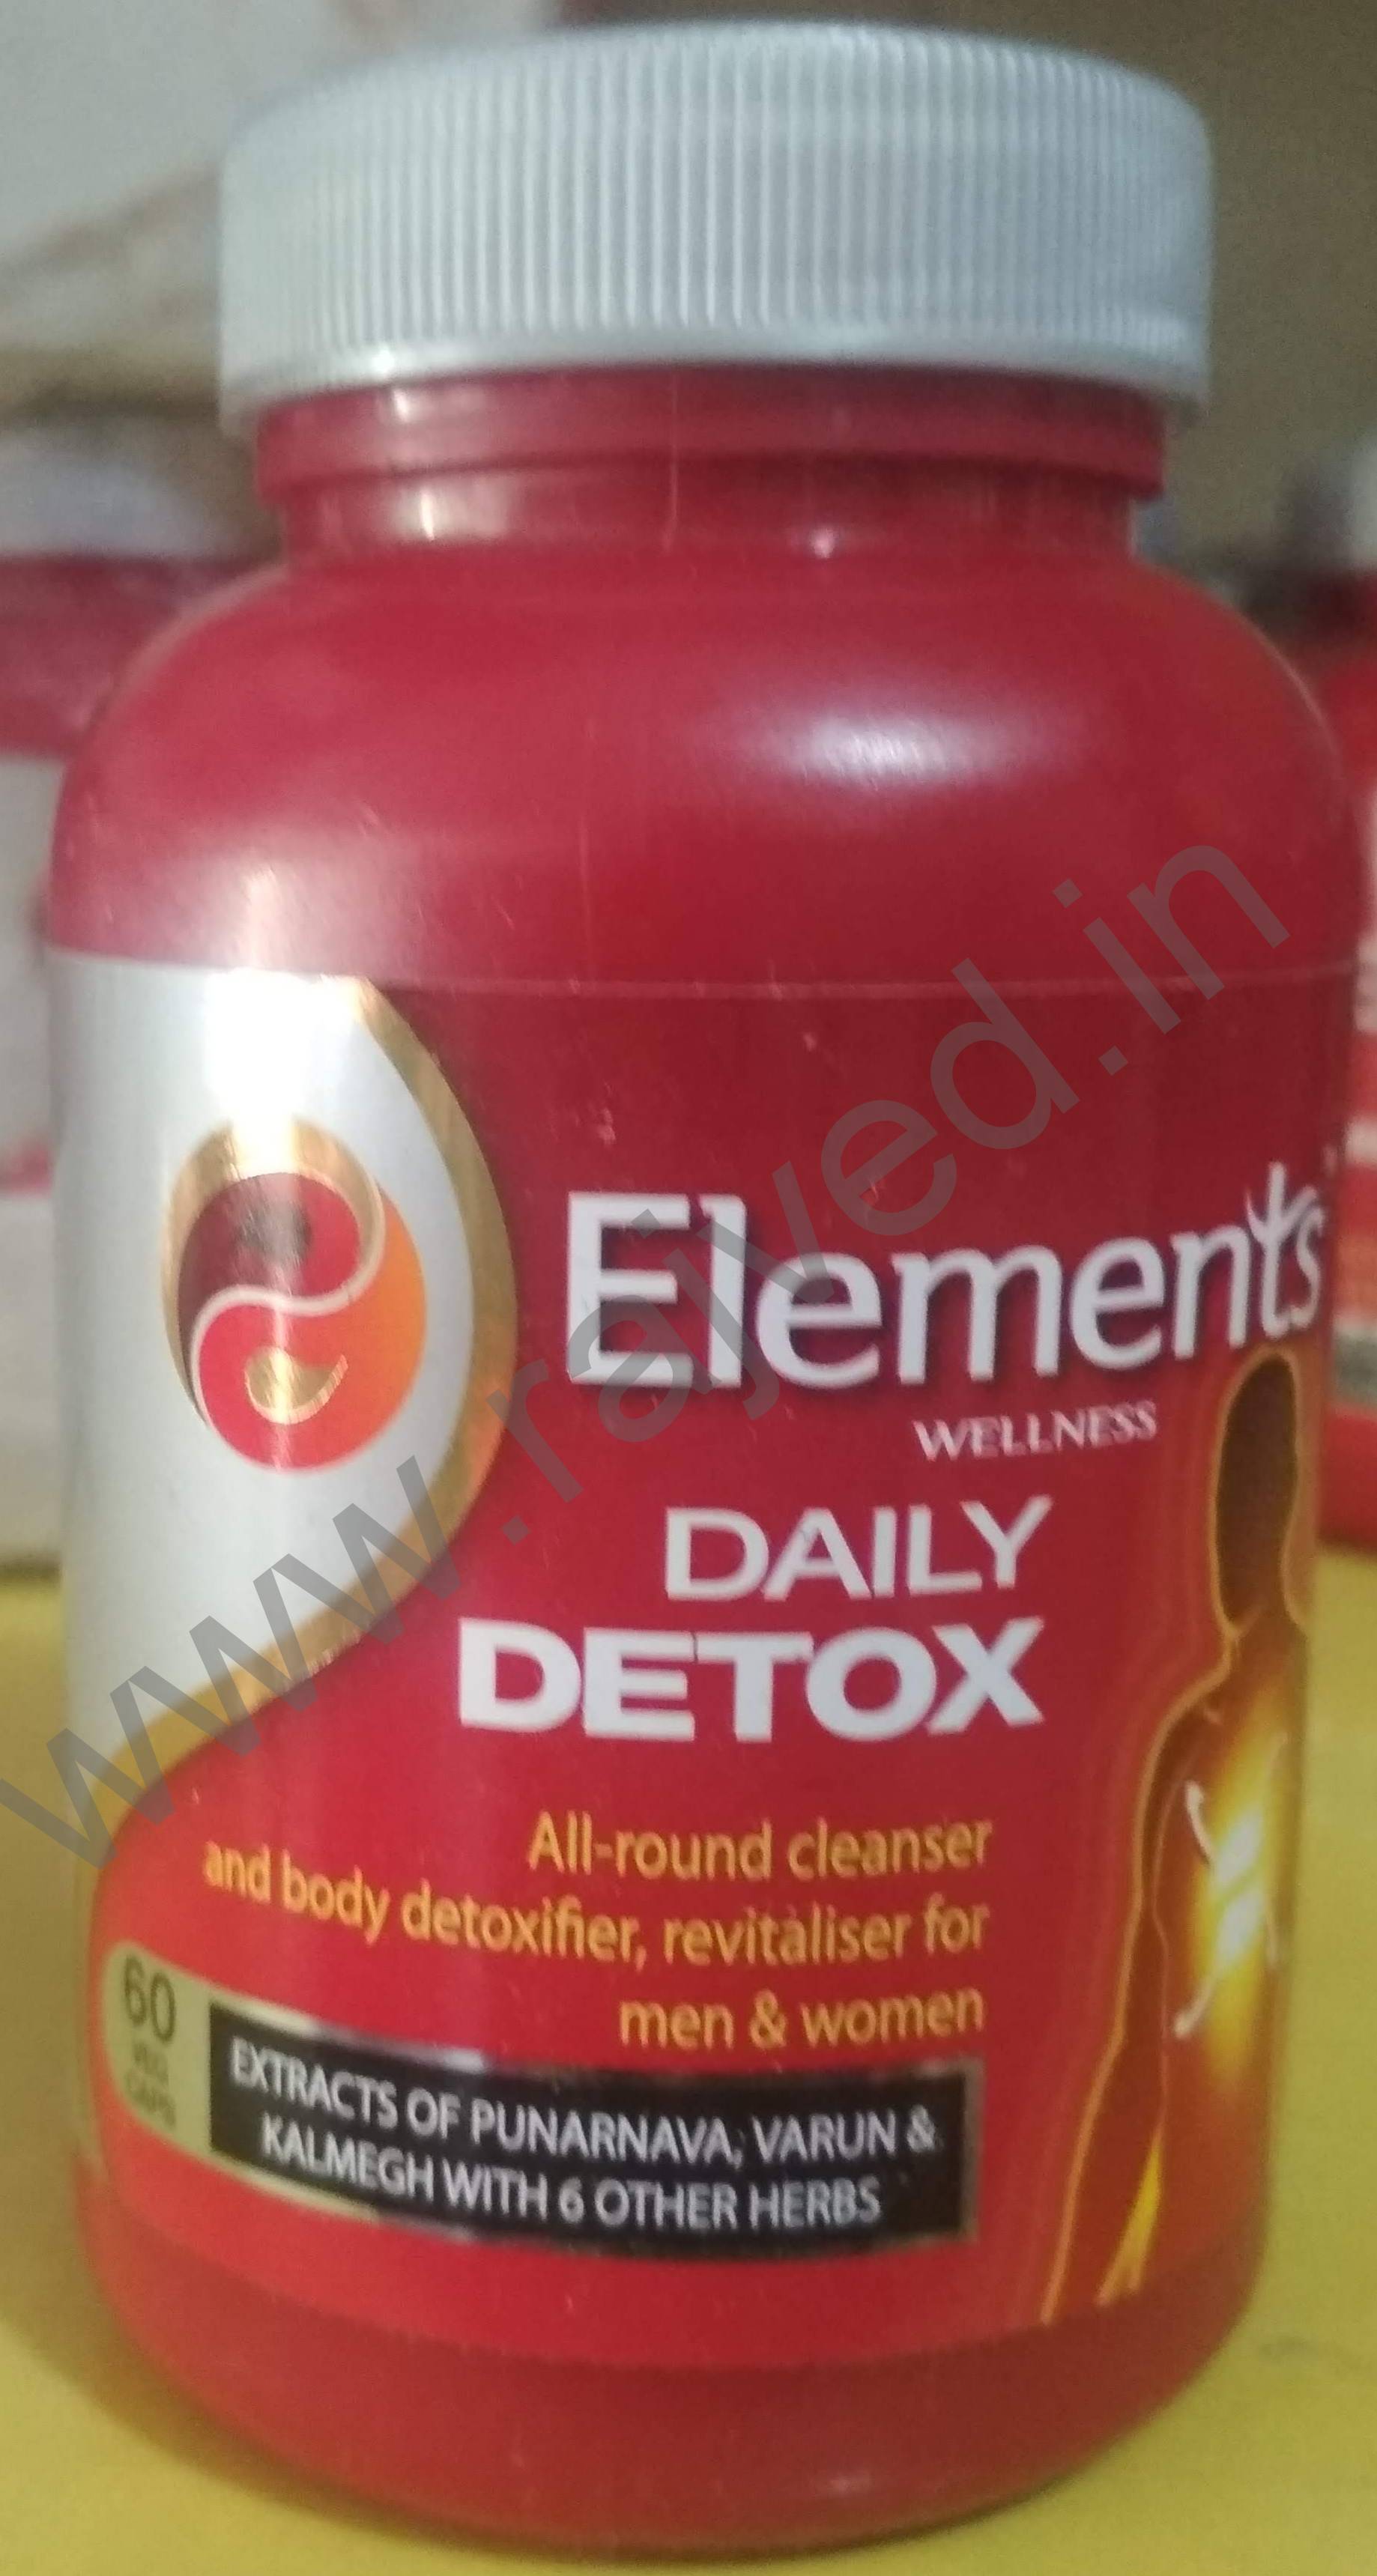 daily detox capsule 60cap upto 15% off Elements